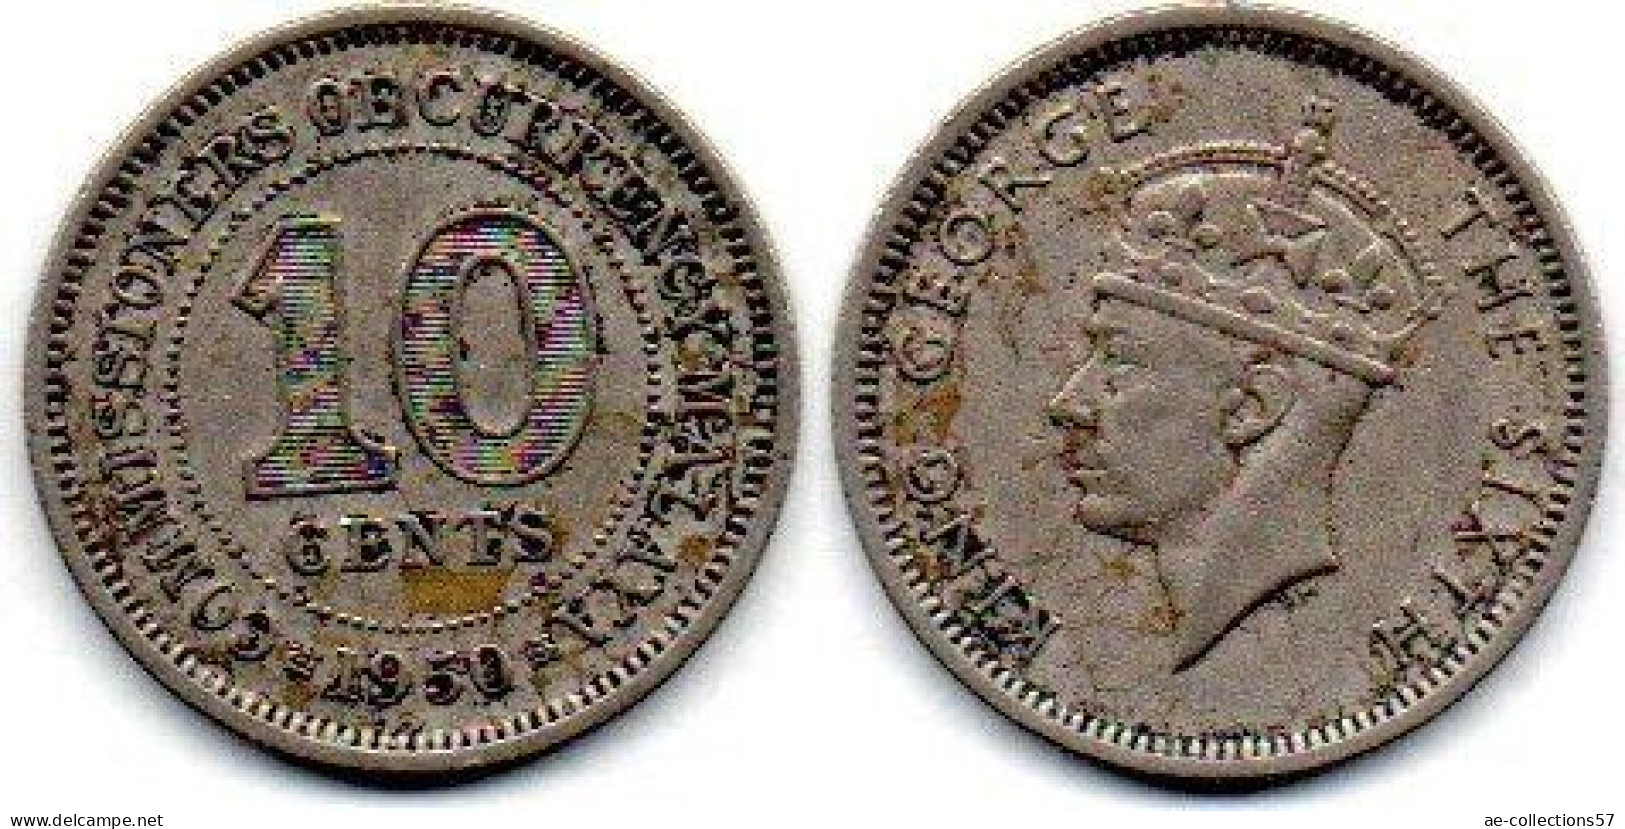 MA 25210  /  Malaya 10 Cents 1950 TB+ - Malaysie